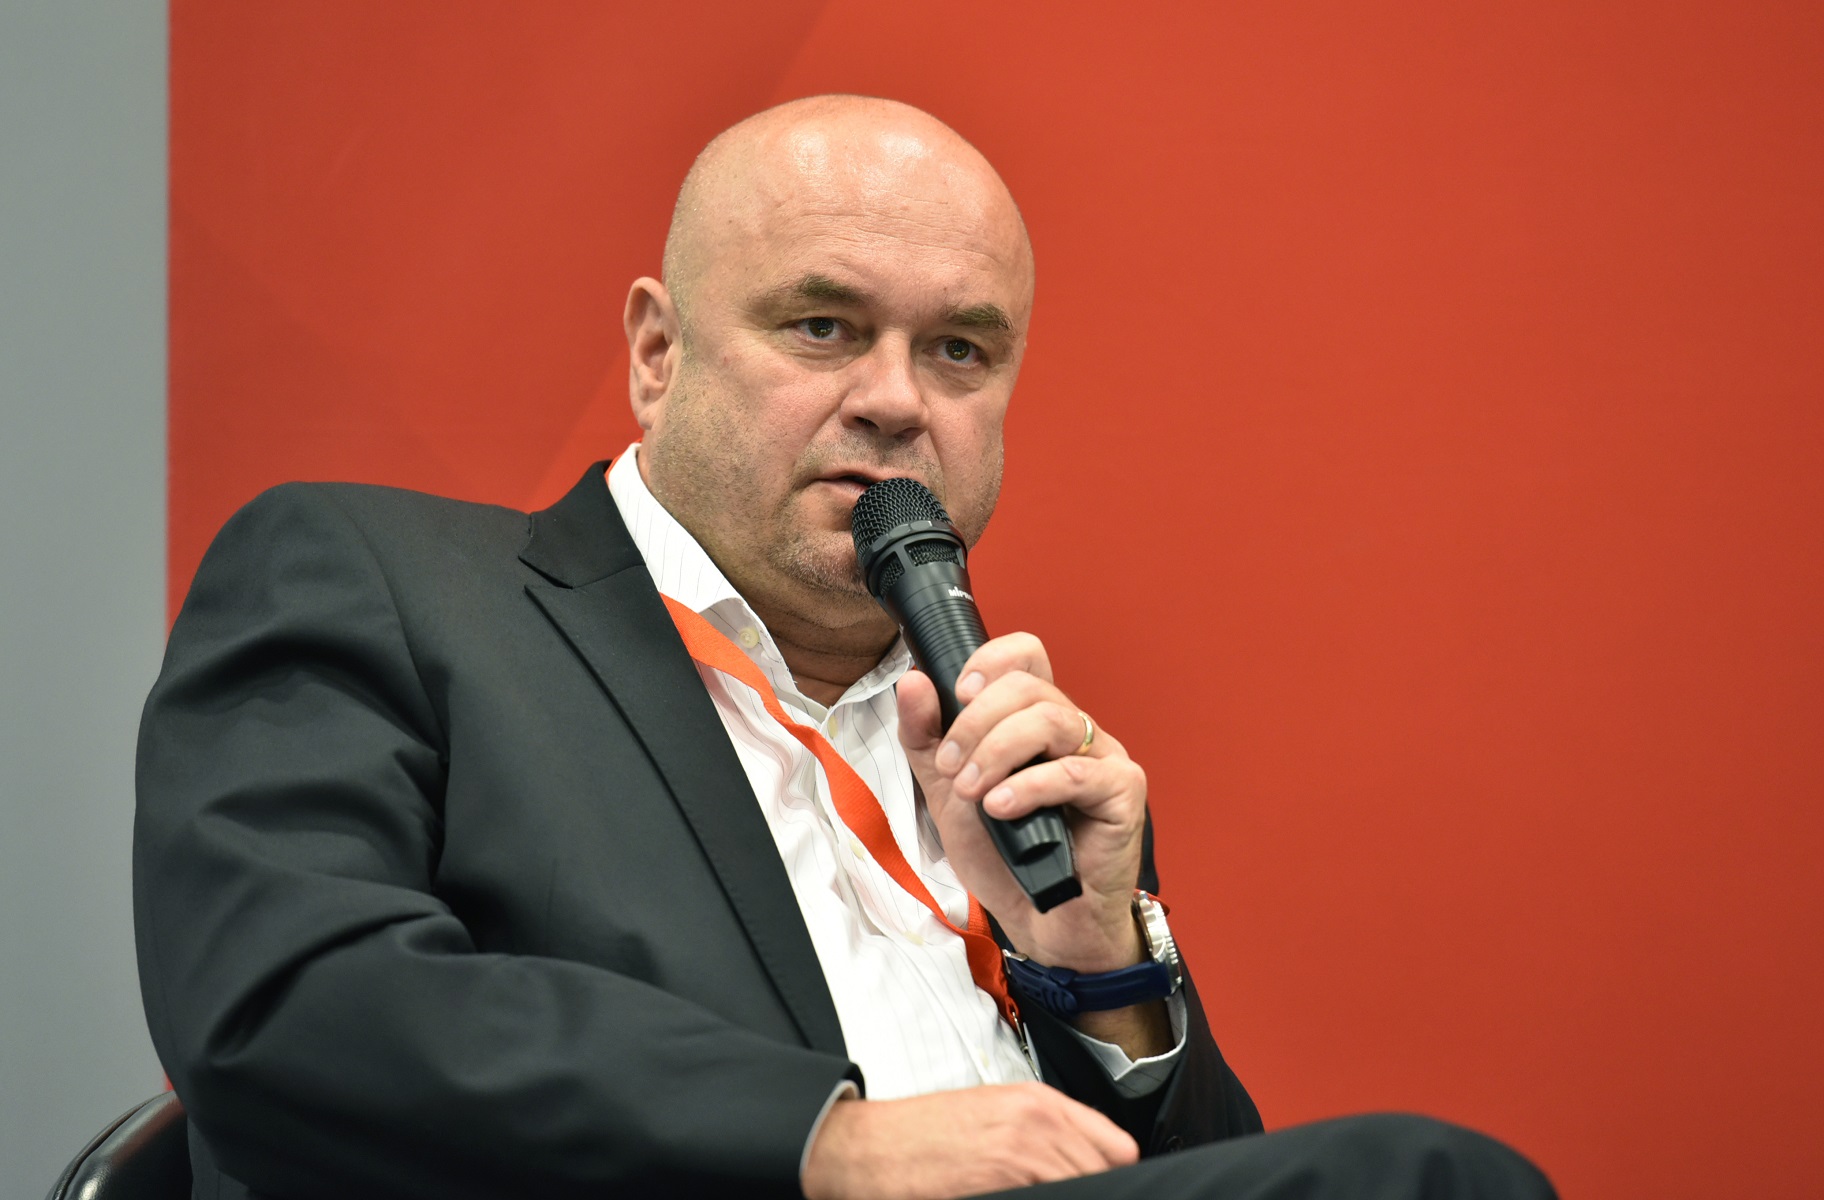 Peter Halász (Jaga Group), Reality Summit 2022